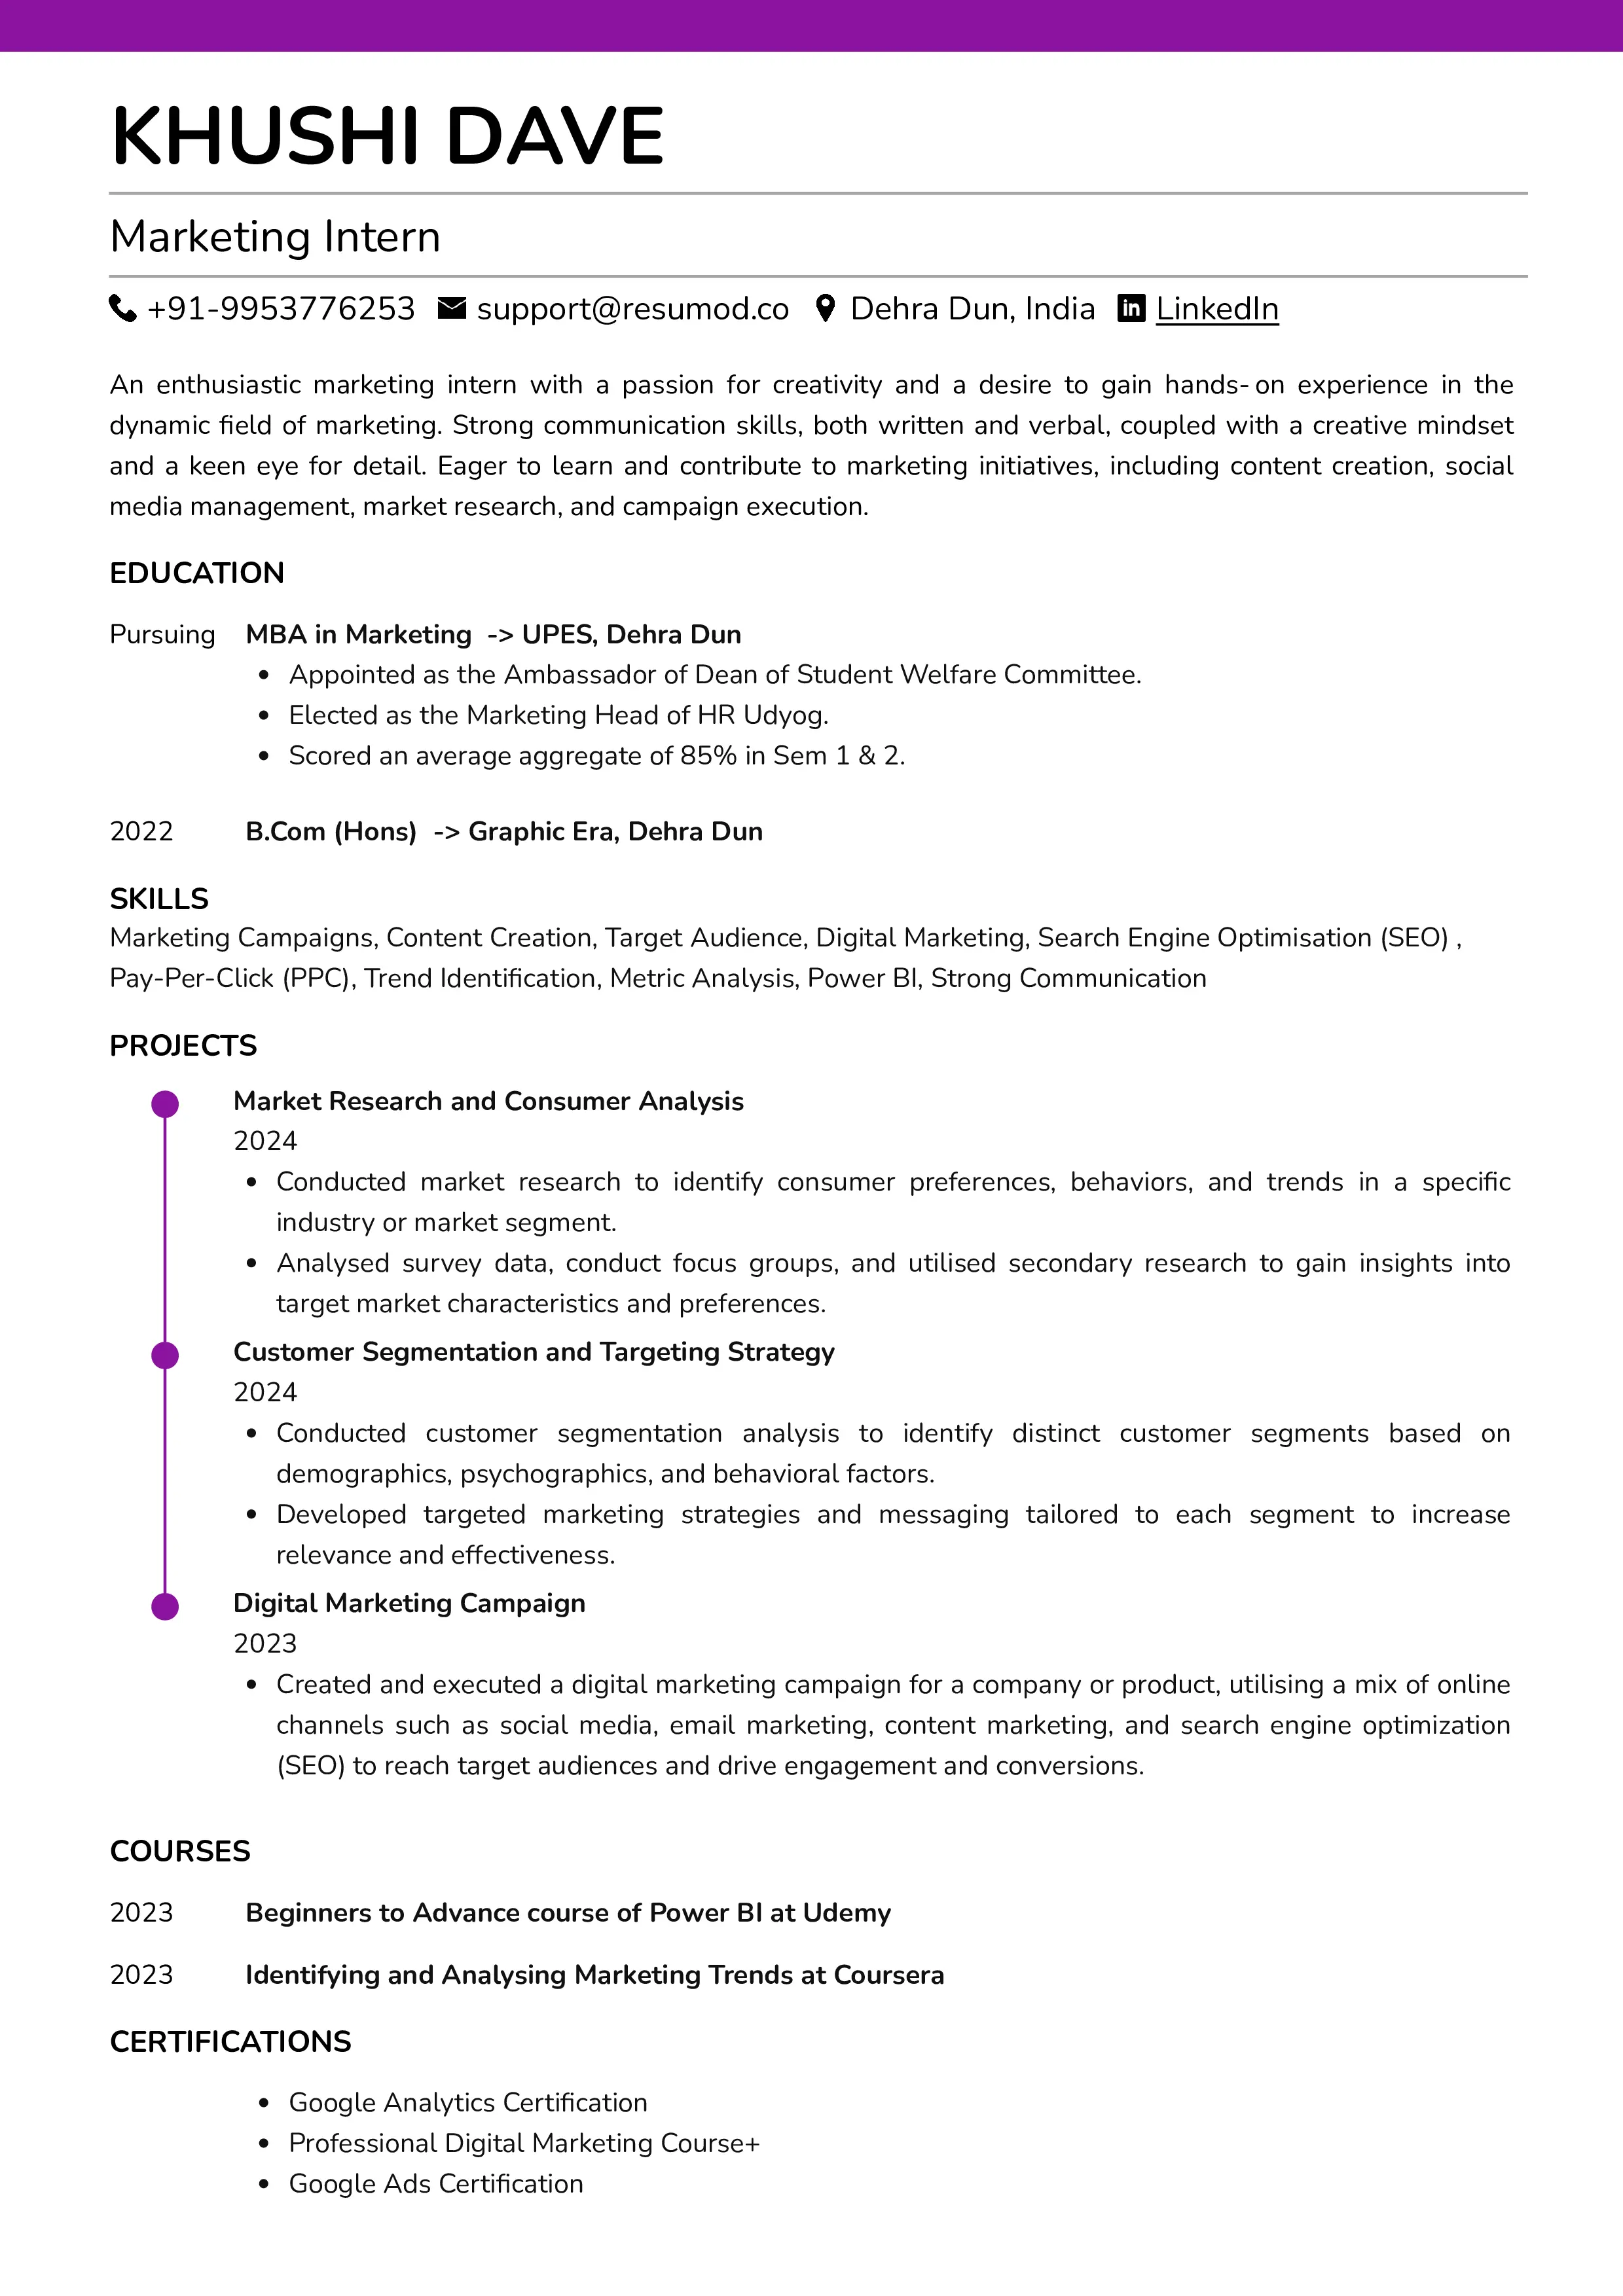 Sample Resume of Marketing Intern | Free Resume Templates & Samples on Resumod.co